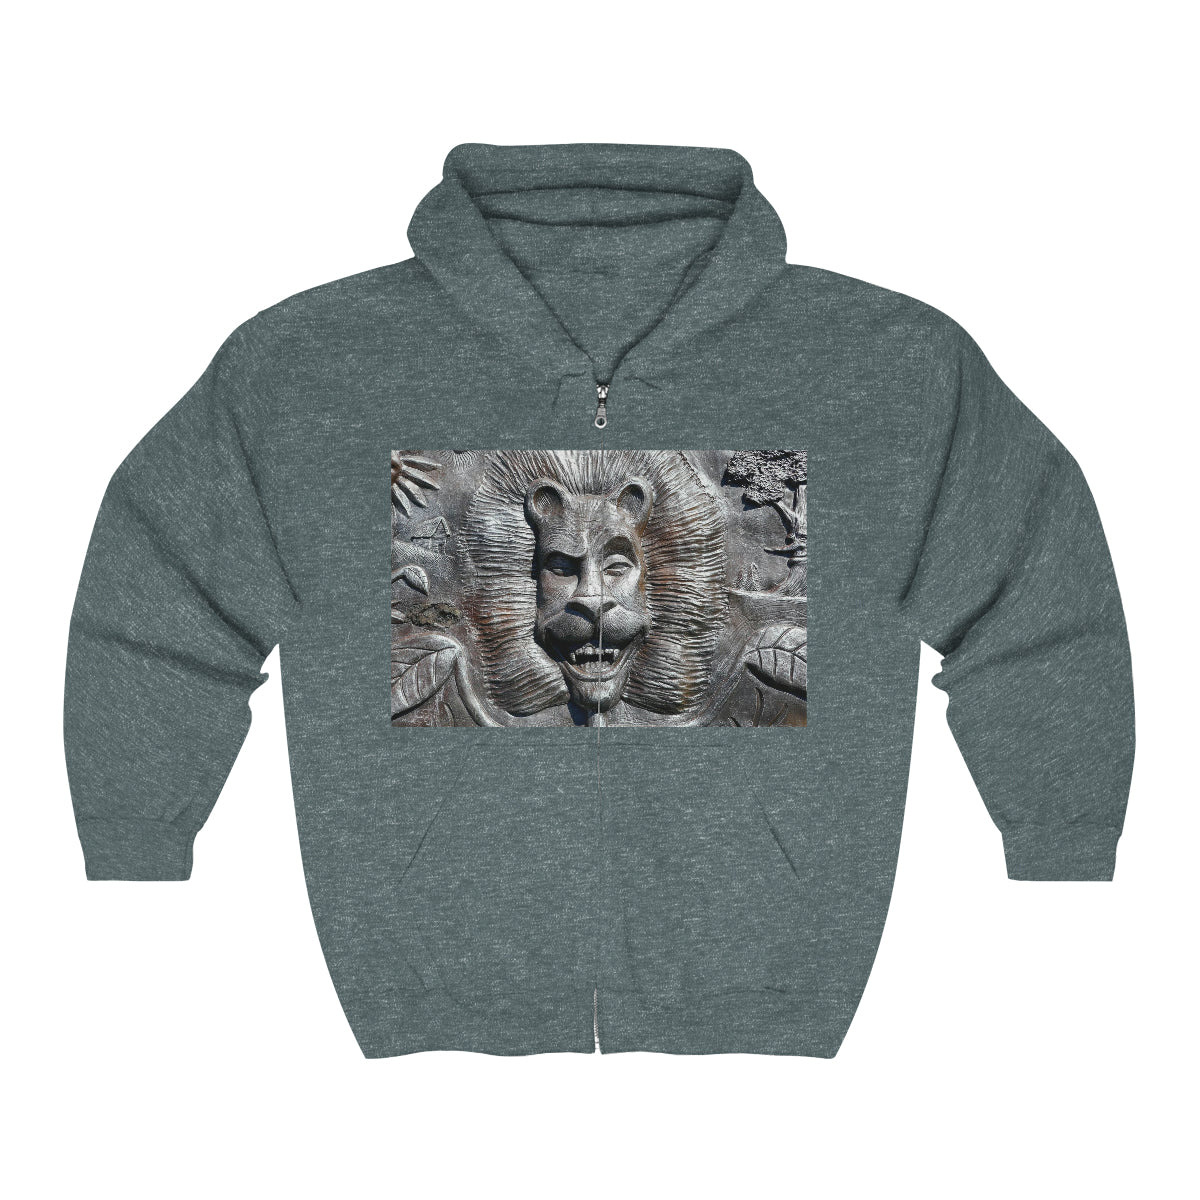 Lion's Friends Forever - Unisex Heavy Blend Full Zip Hooded Sweatshirt - Fry1Productions